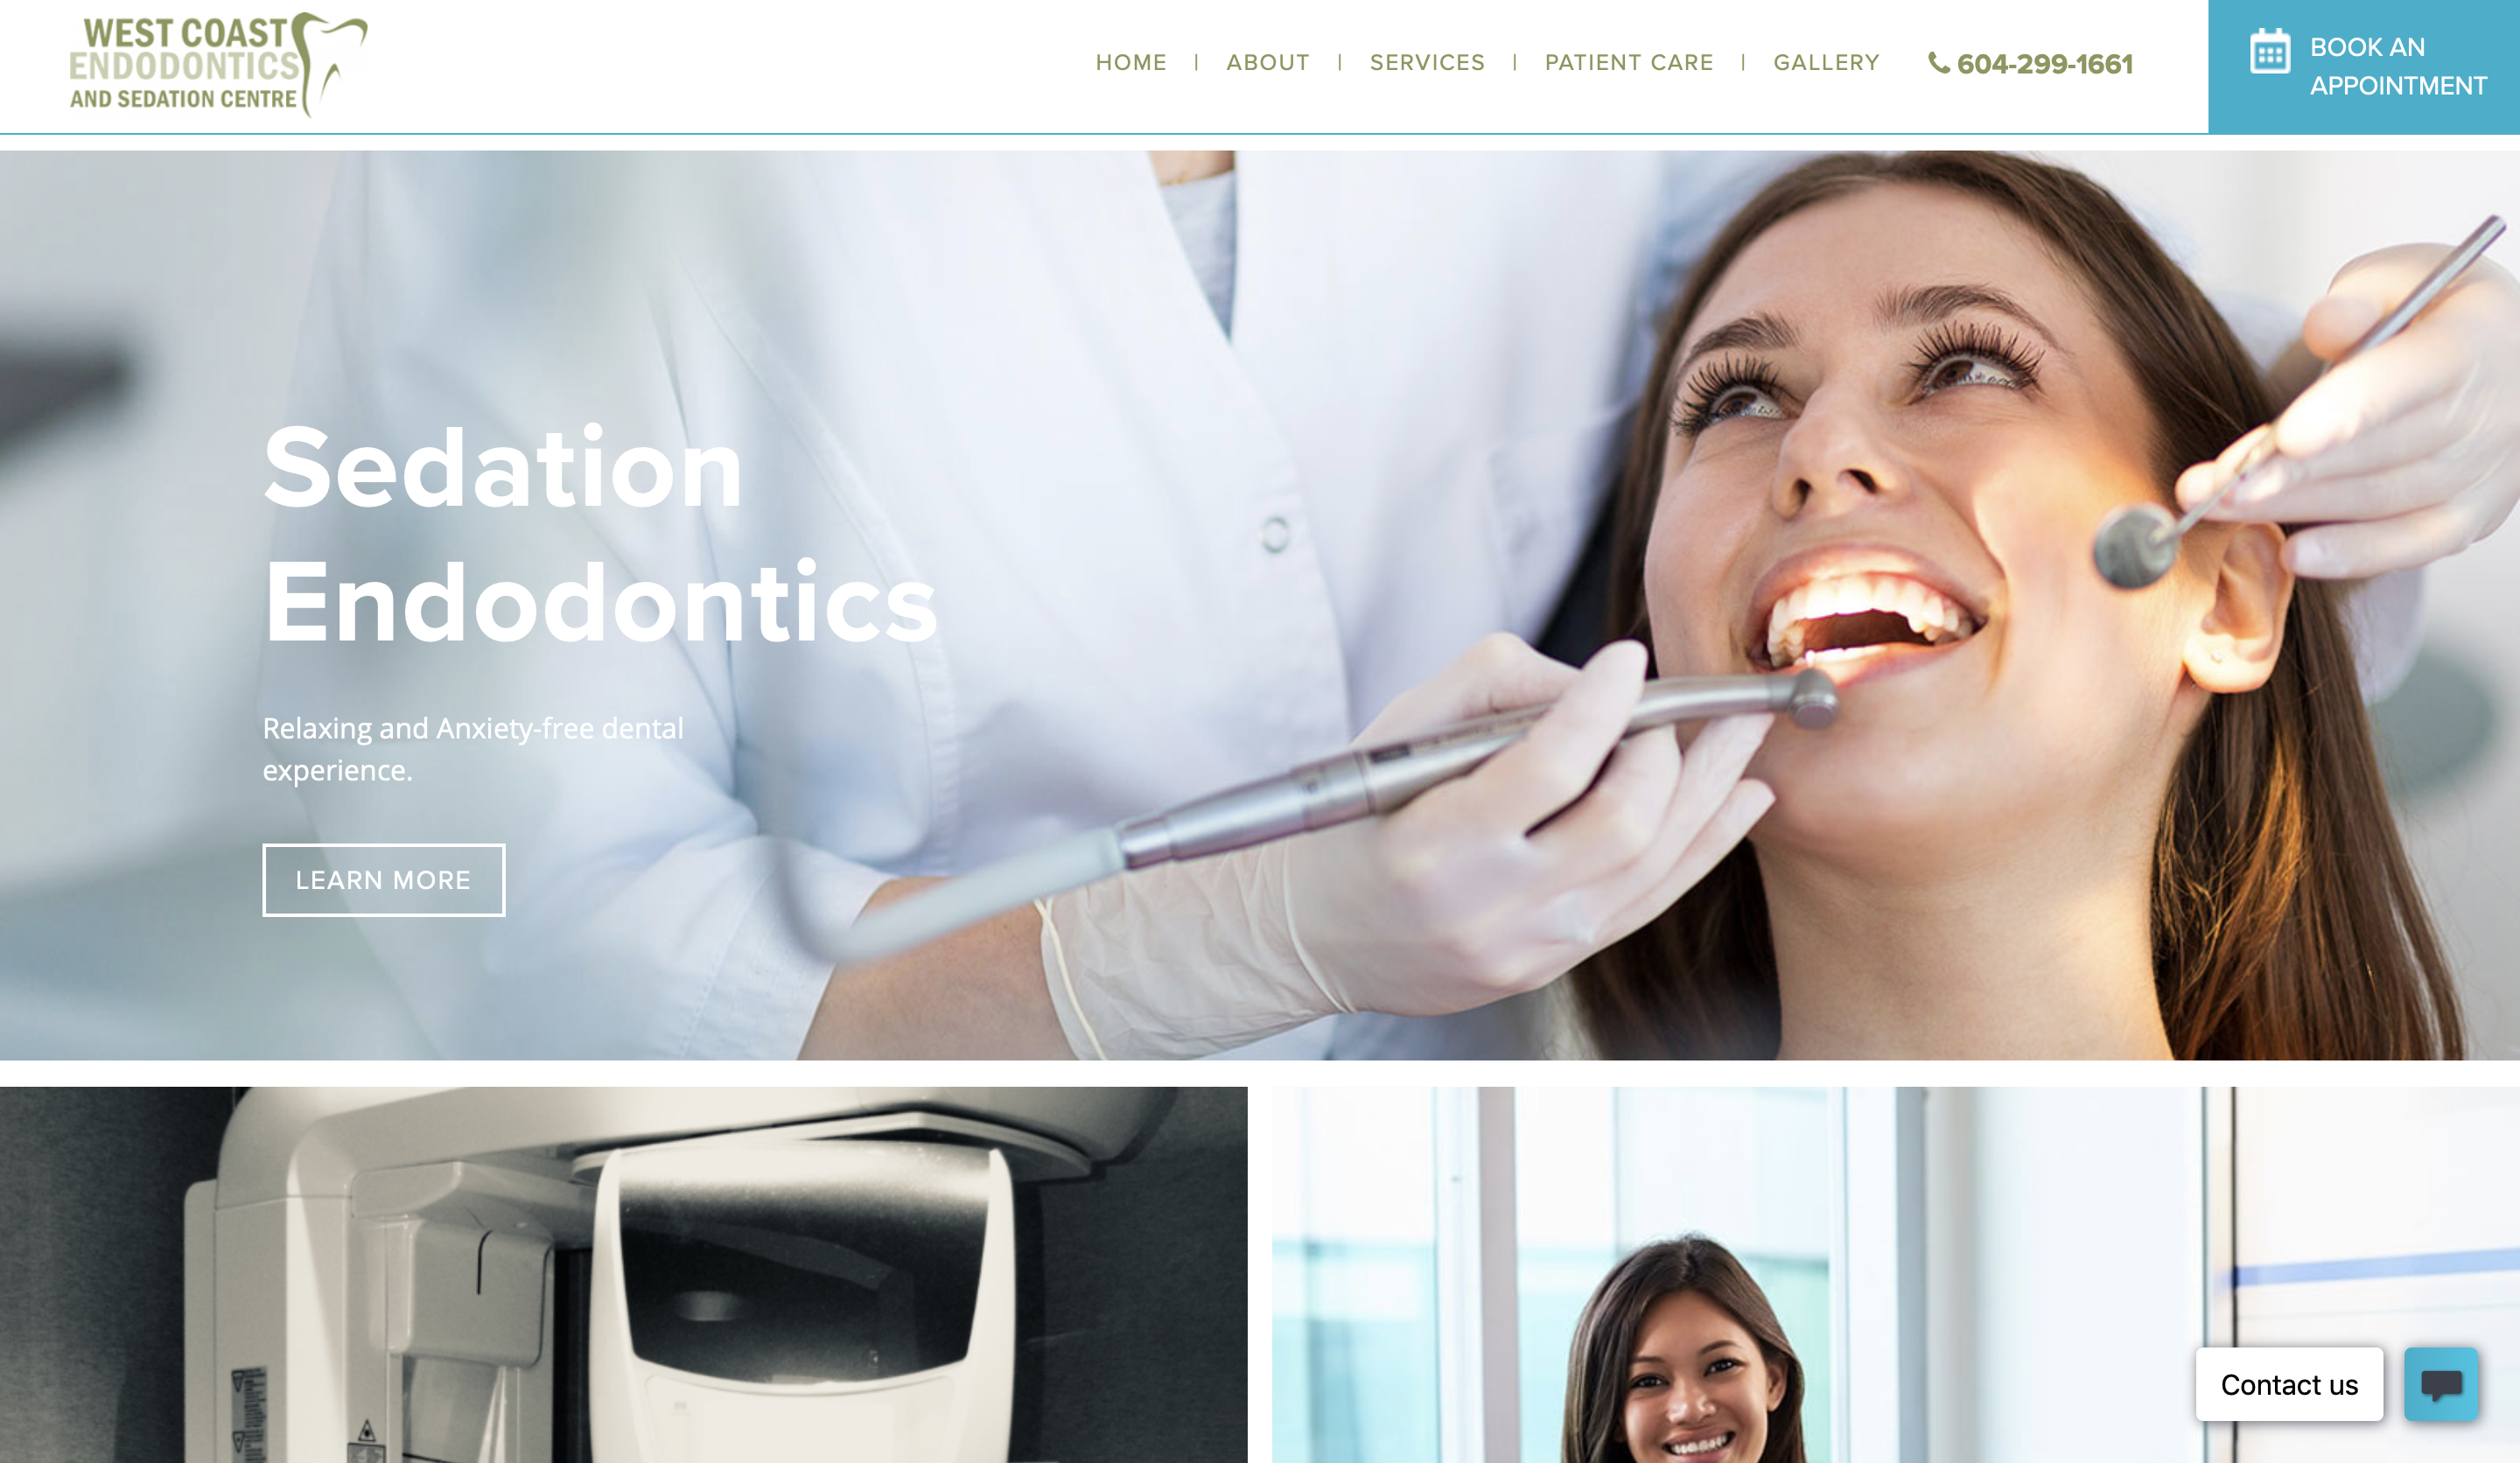 West Coast Endodontics and Sedation Centre